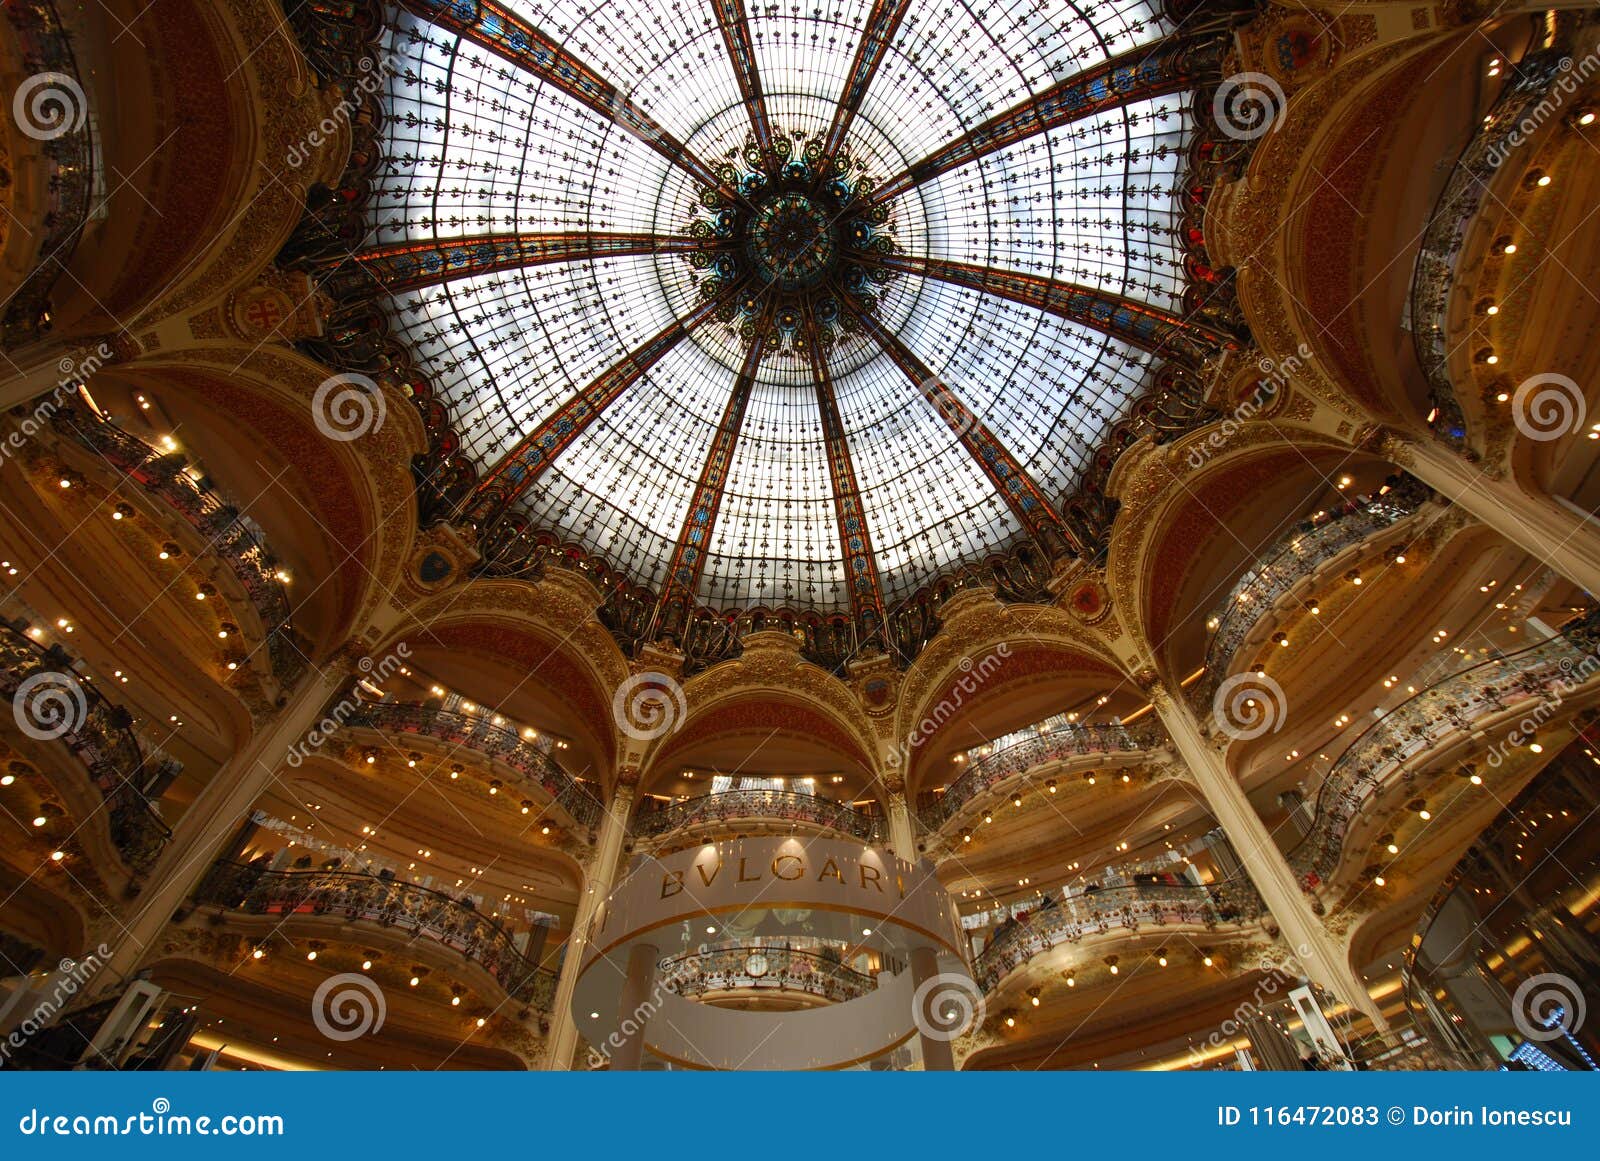 Galeries Lafayette Store Dome Ceiling Building Symmetry